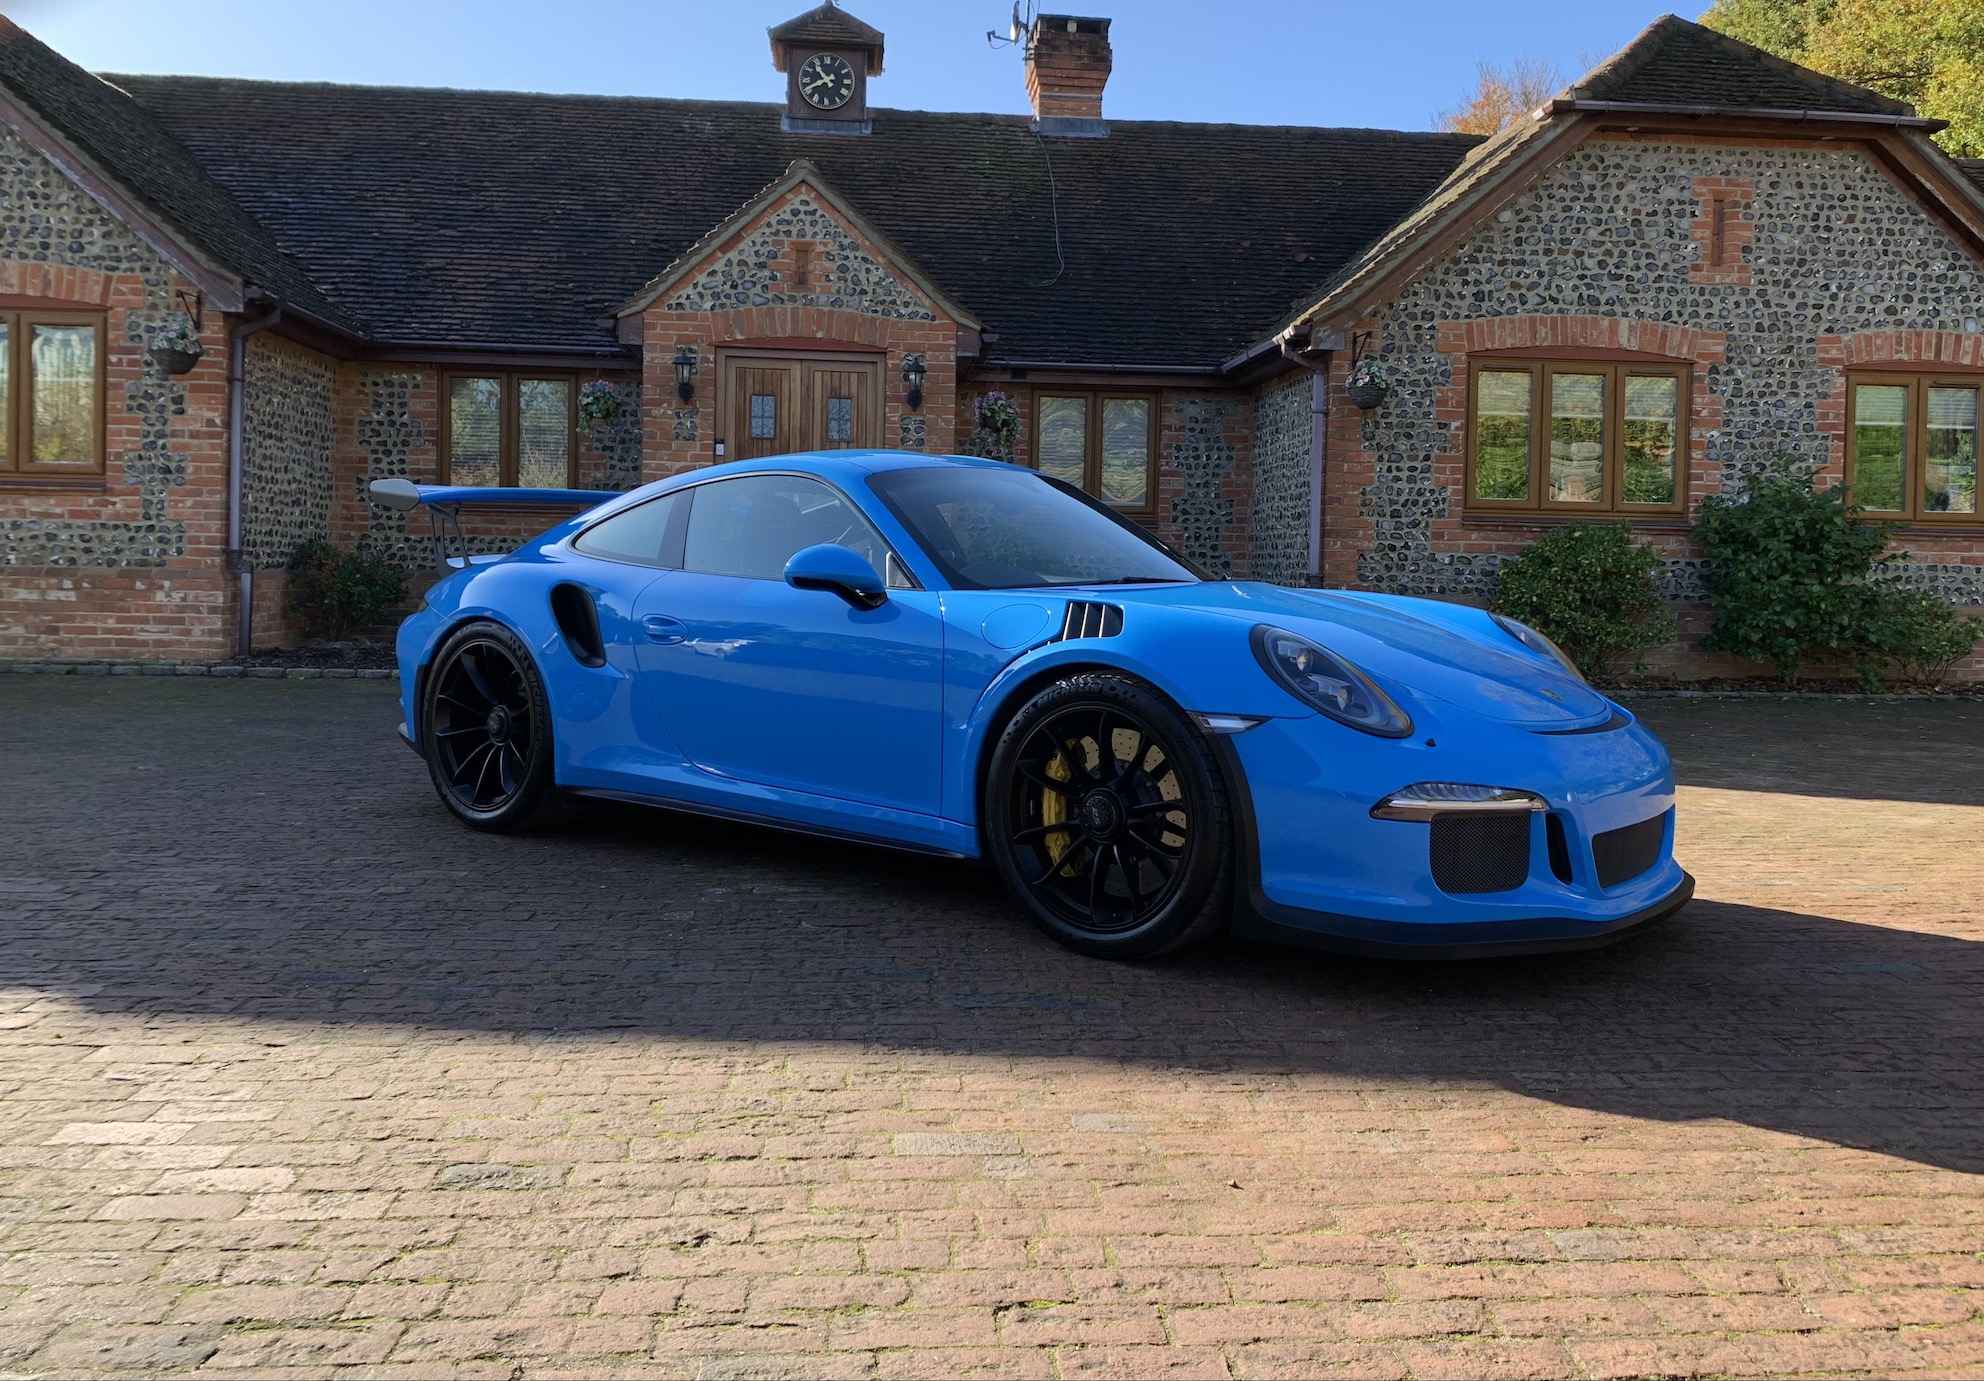 Porsche 991 GT3 RS Riviera Blue for sale with Redline Engineering UK